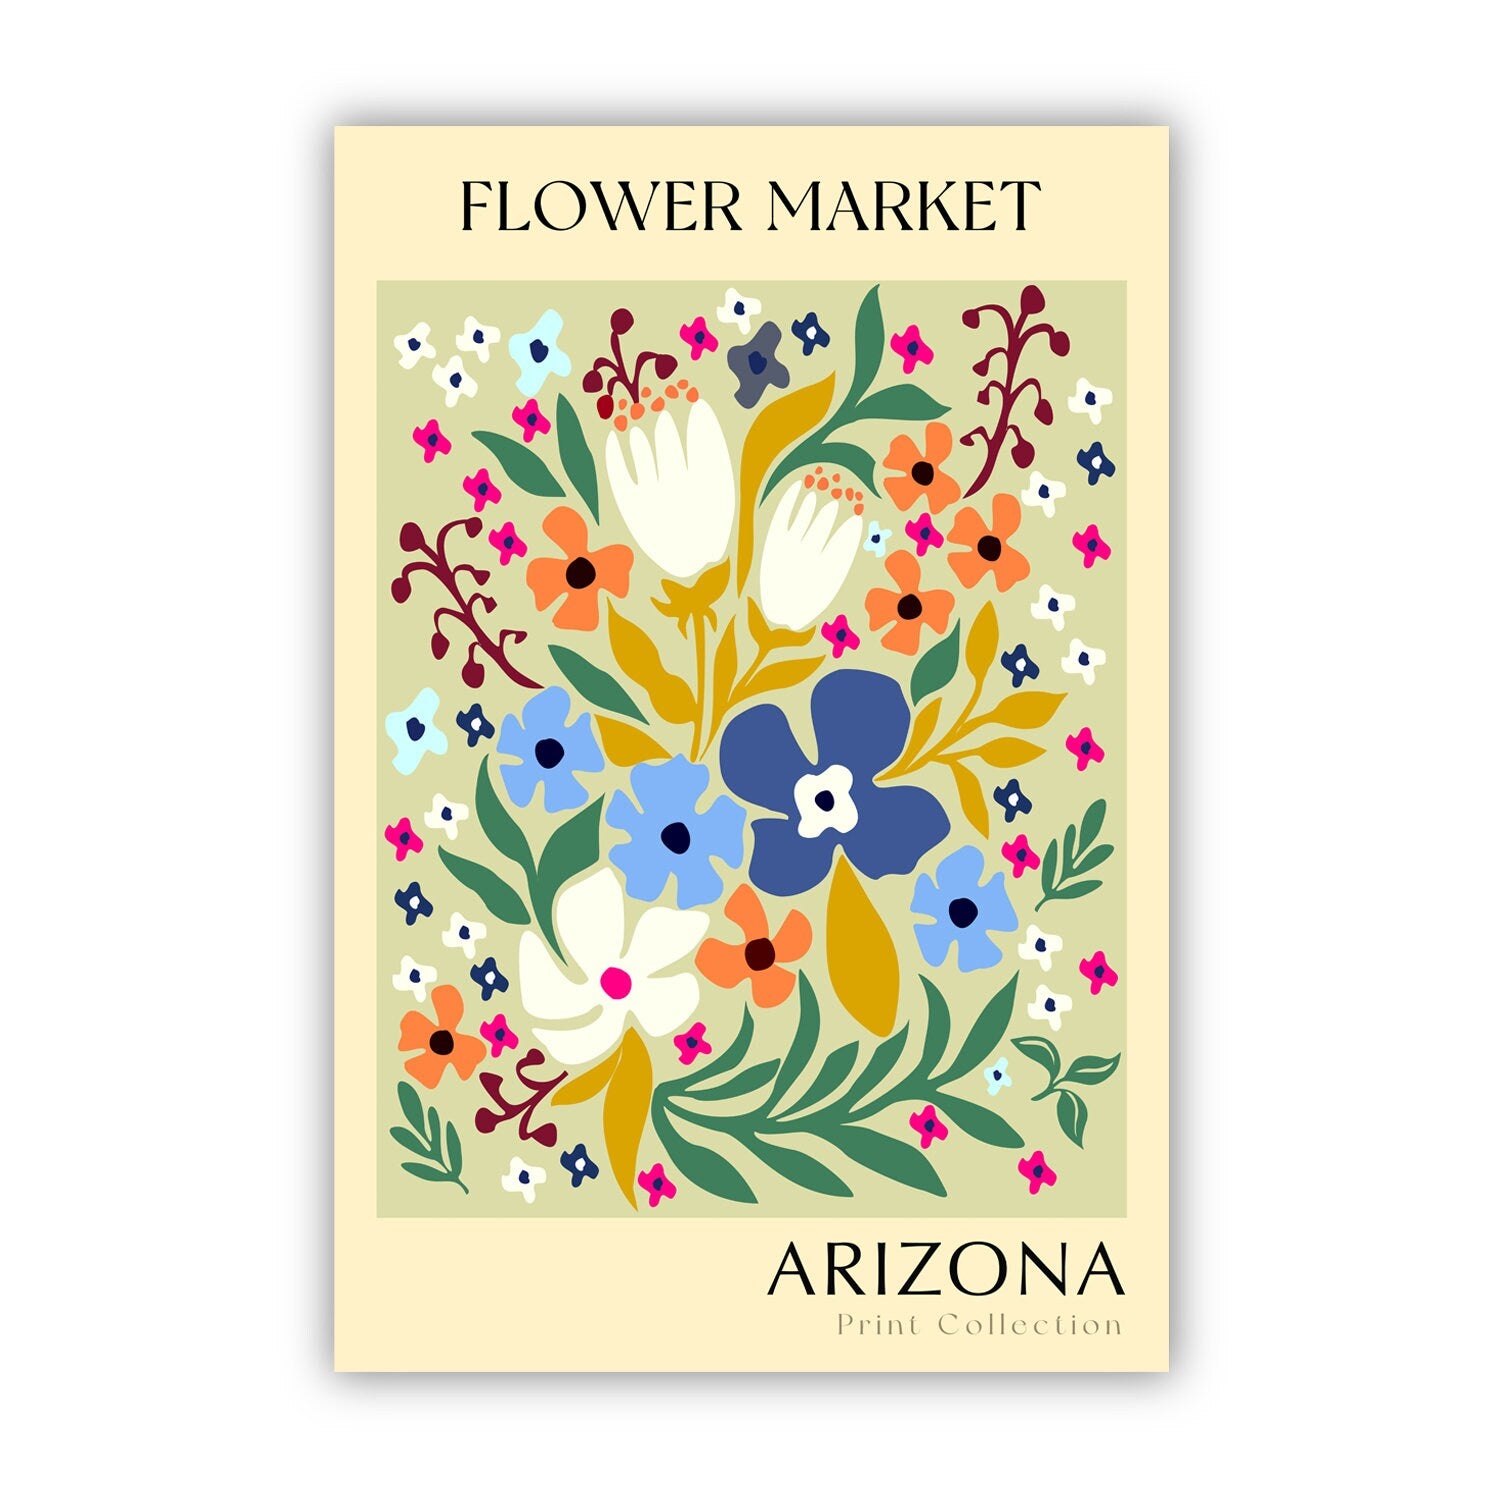 Arizona State flower print, USA states poster, Arizona flower market poster, Botanical posters, Natural poster artwork, Boho floral wall art